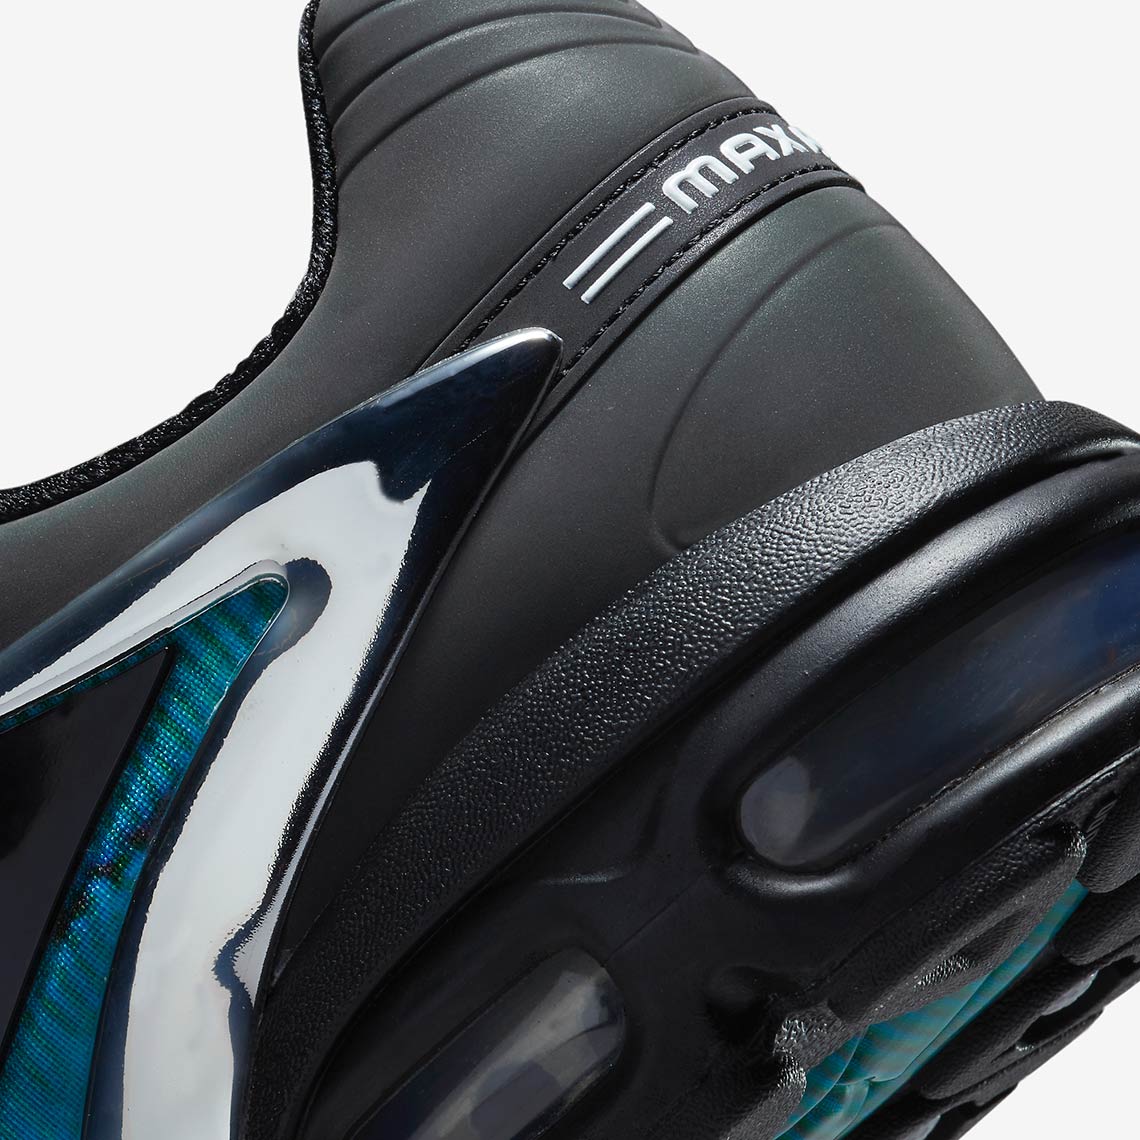 Skepta Nike Air Max Tailwind V Bright Blue Release Date | SneakerNews.com